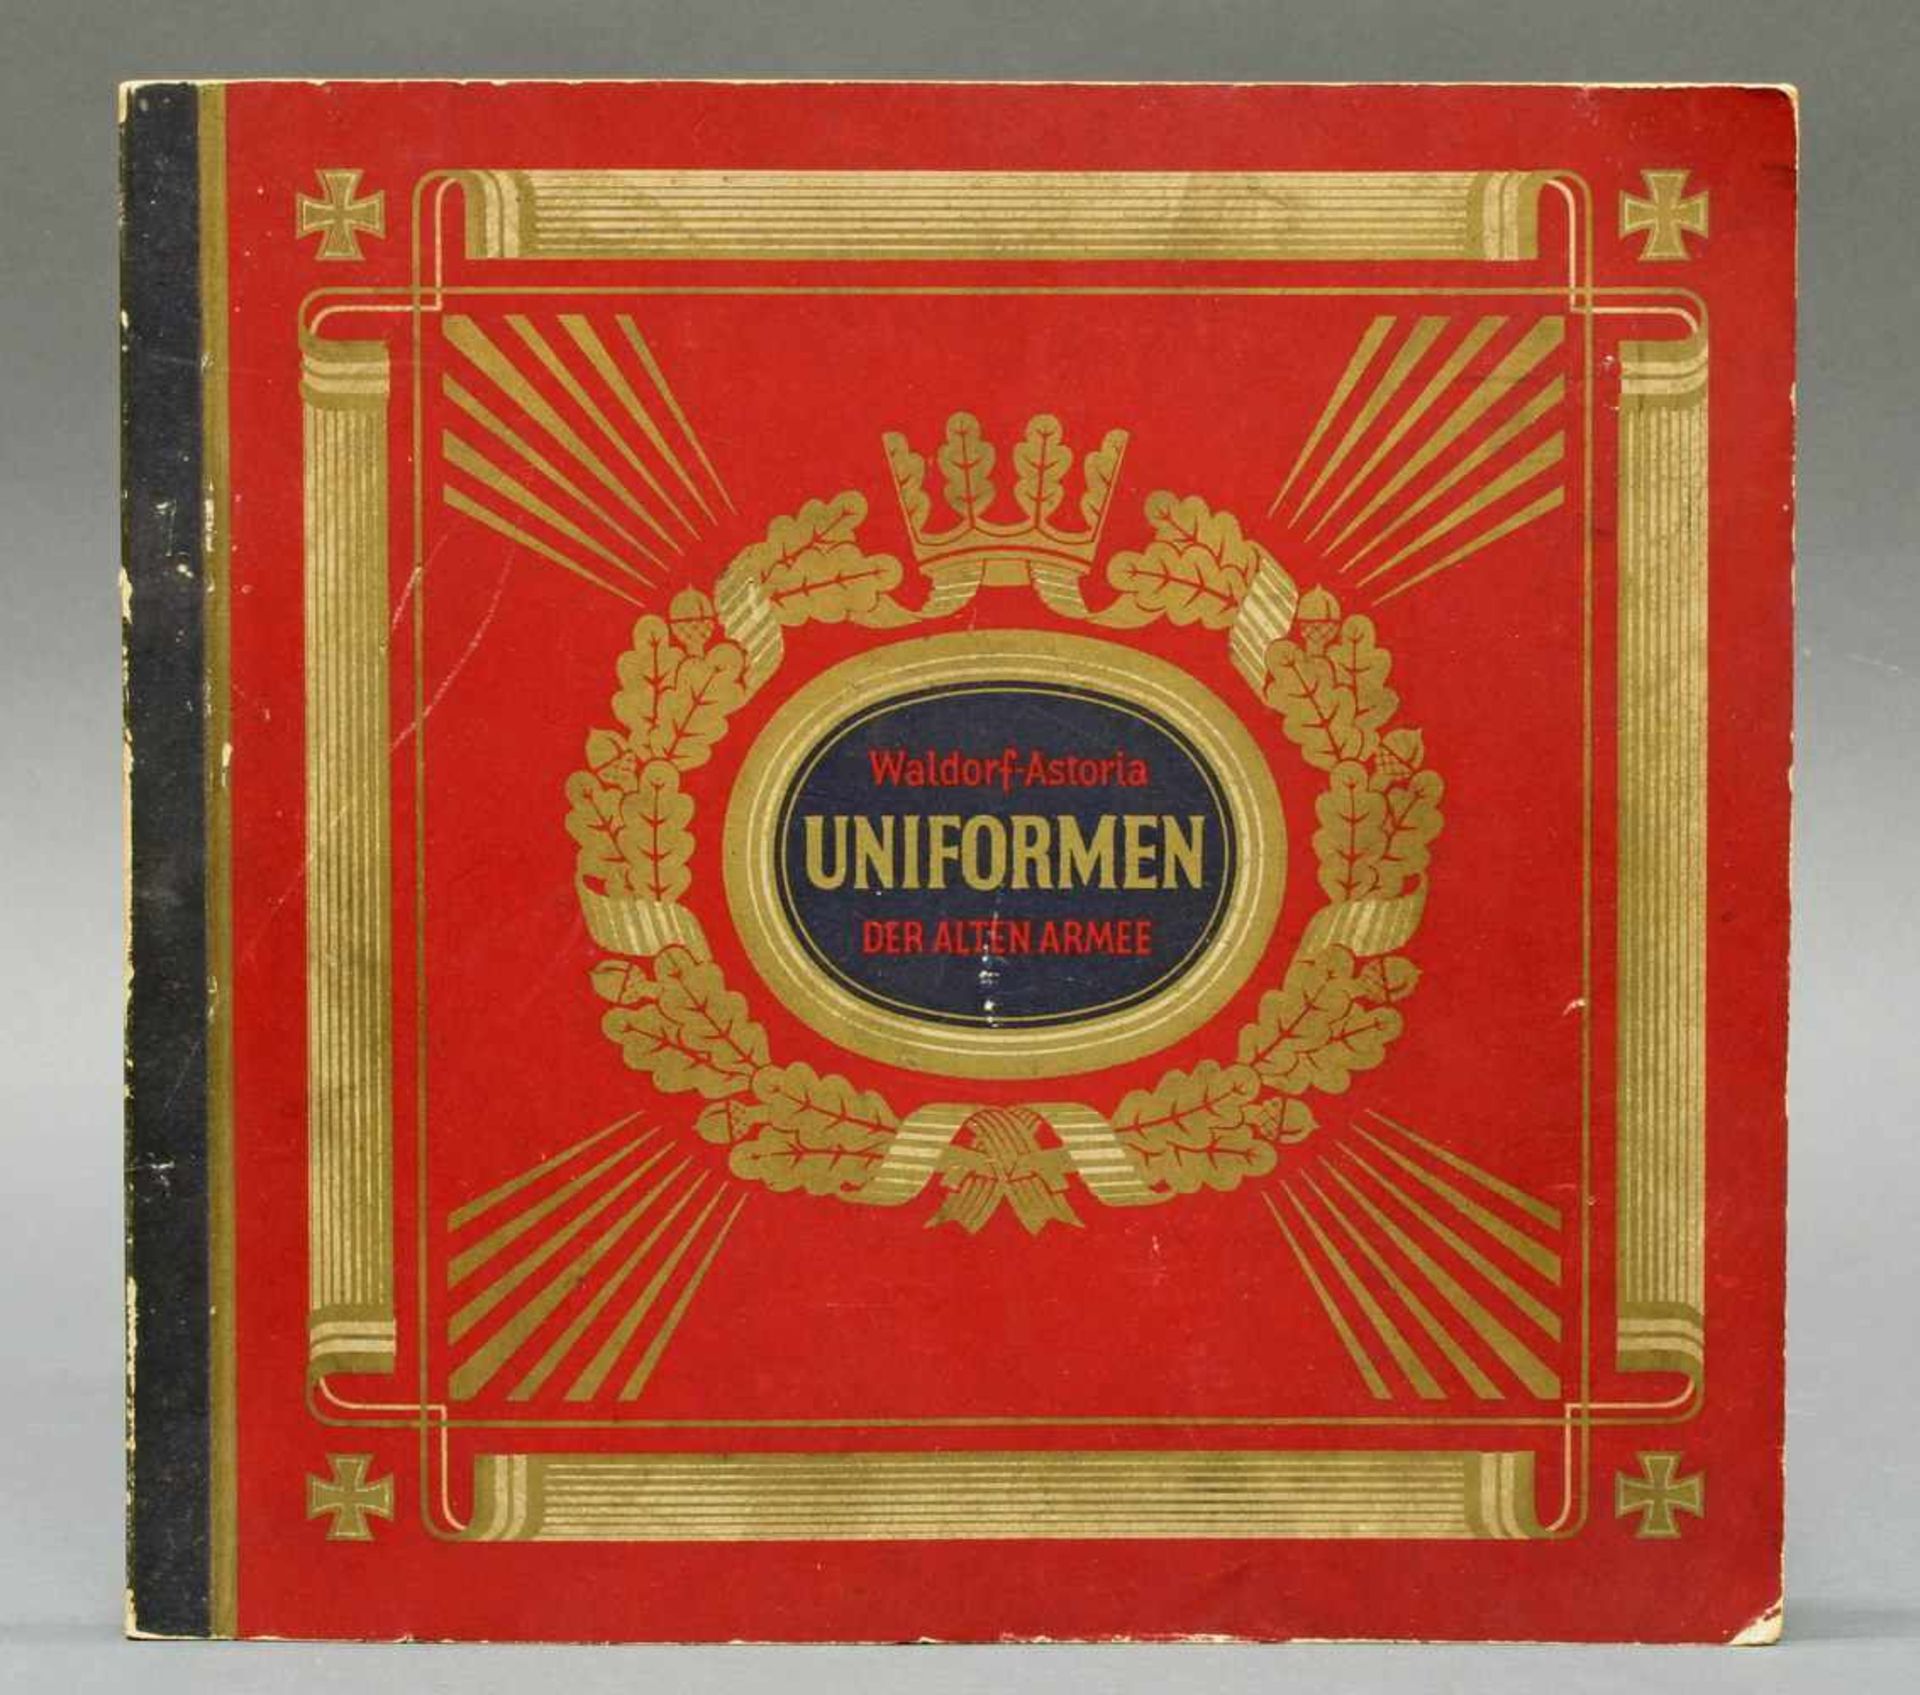 Zigarettenalbum, "Uniformen der alten Armee", Waldorf Astoria, vollständig- - -25.00 % buyer's